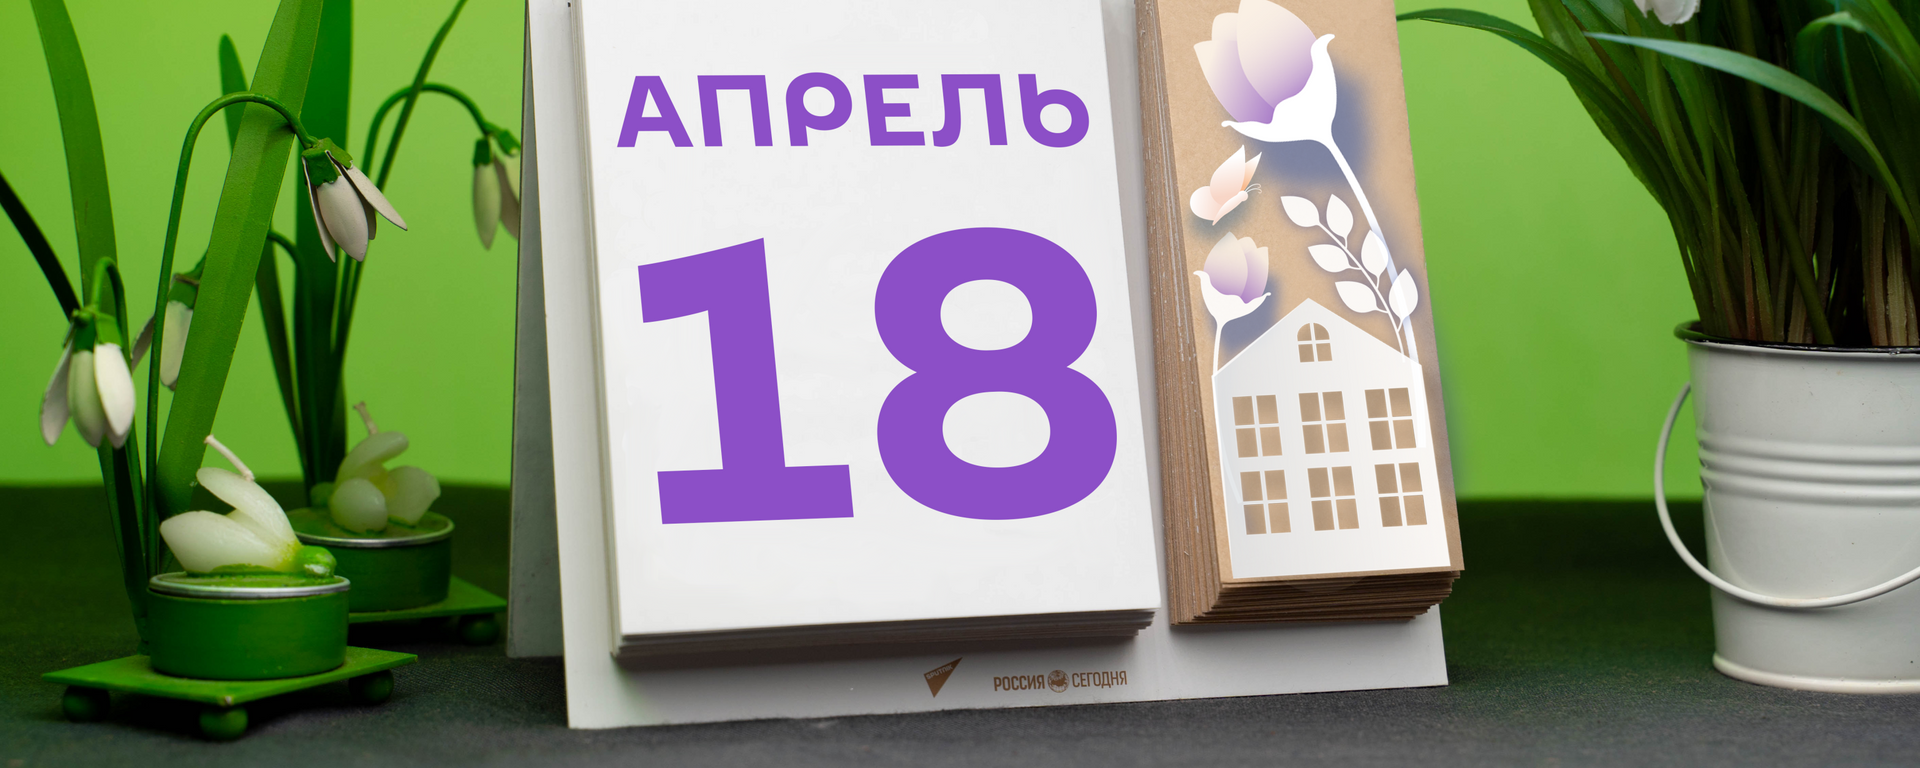 День 18 апреля - Sputnik Тоҷикистон, 1920, 18.04.2021